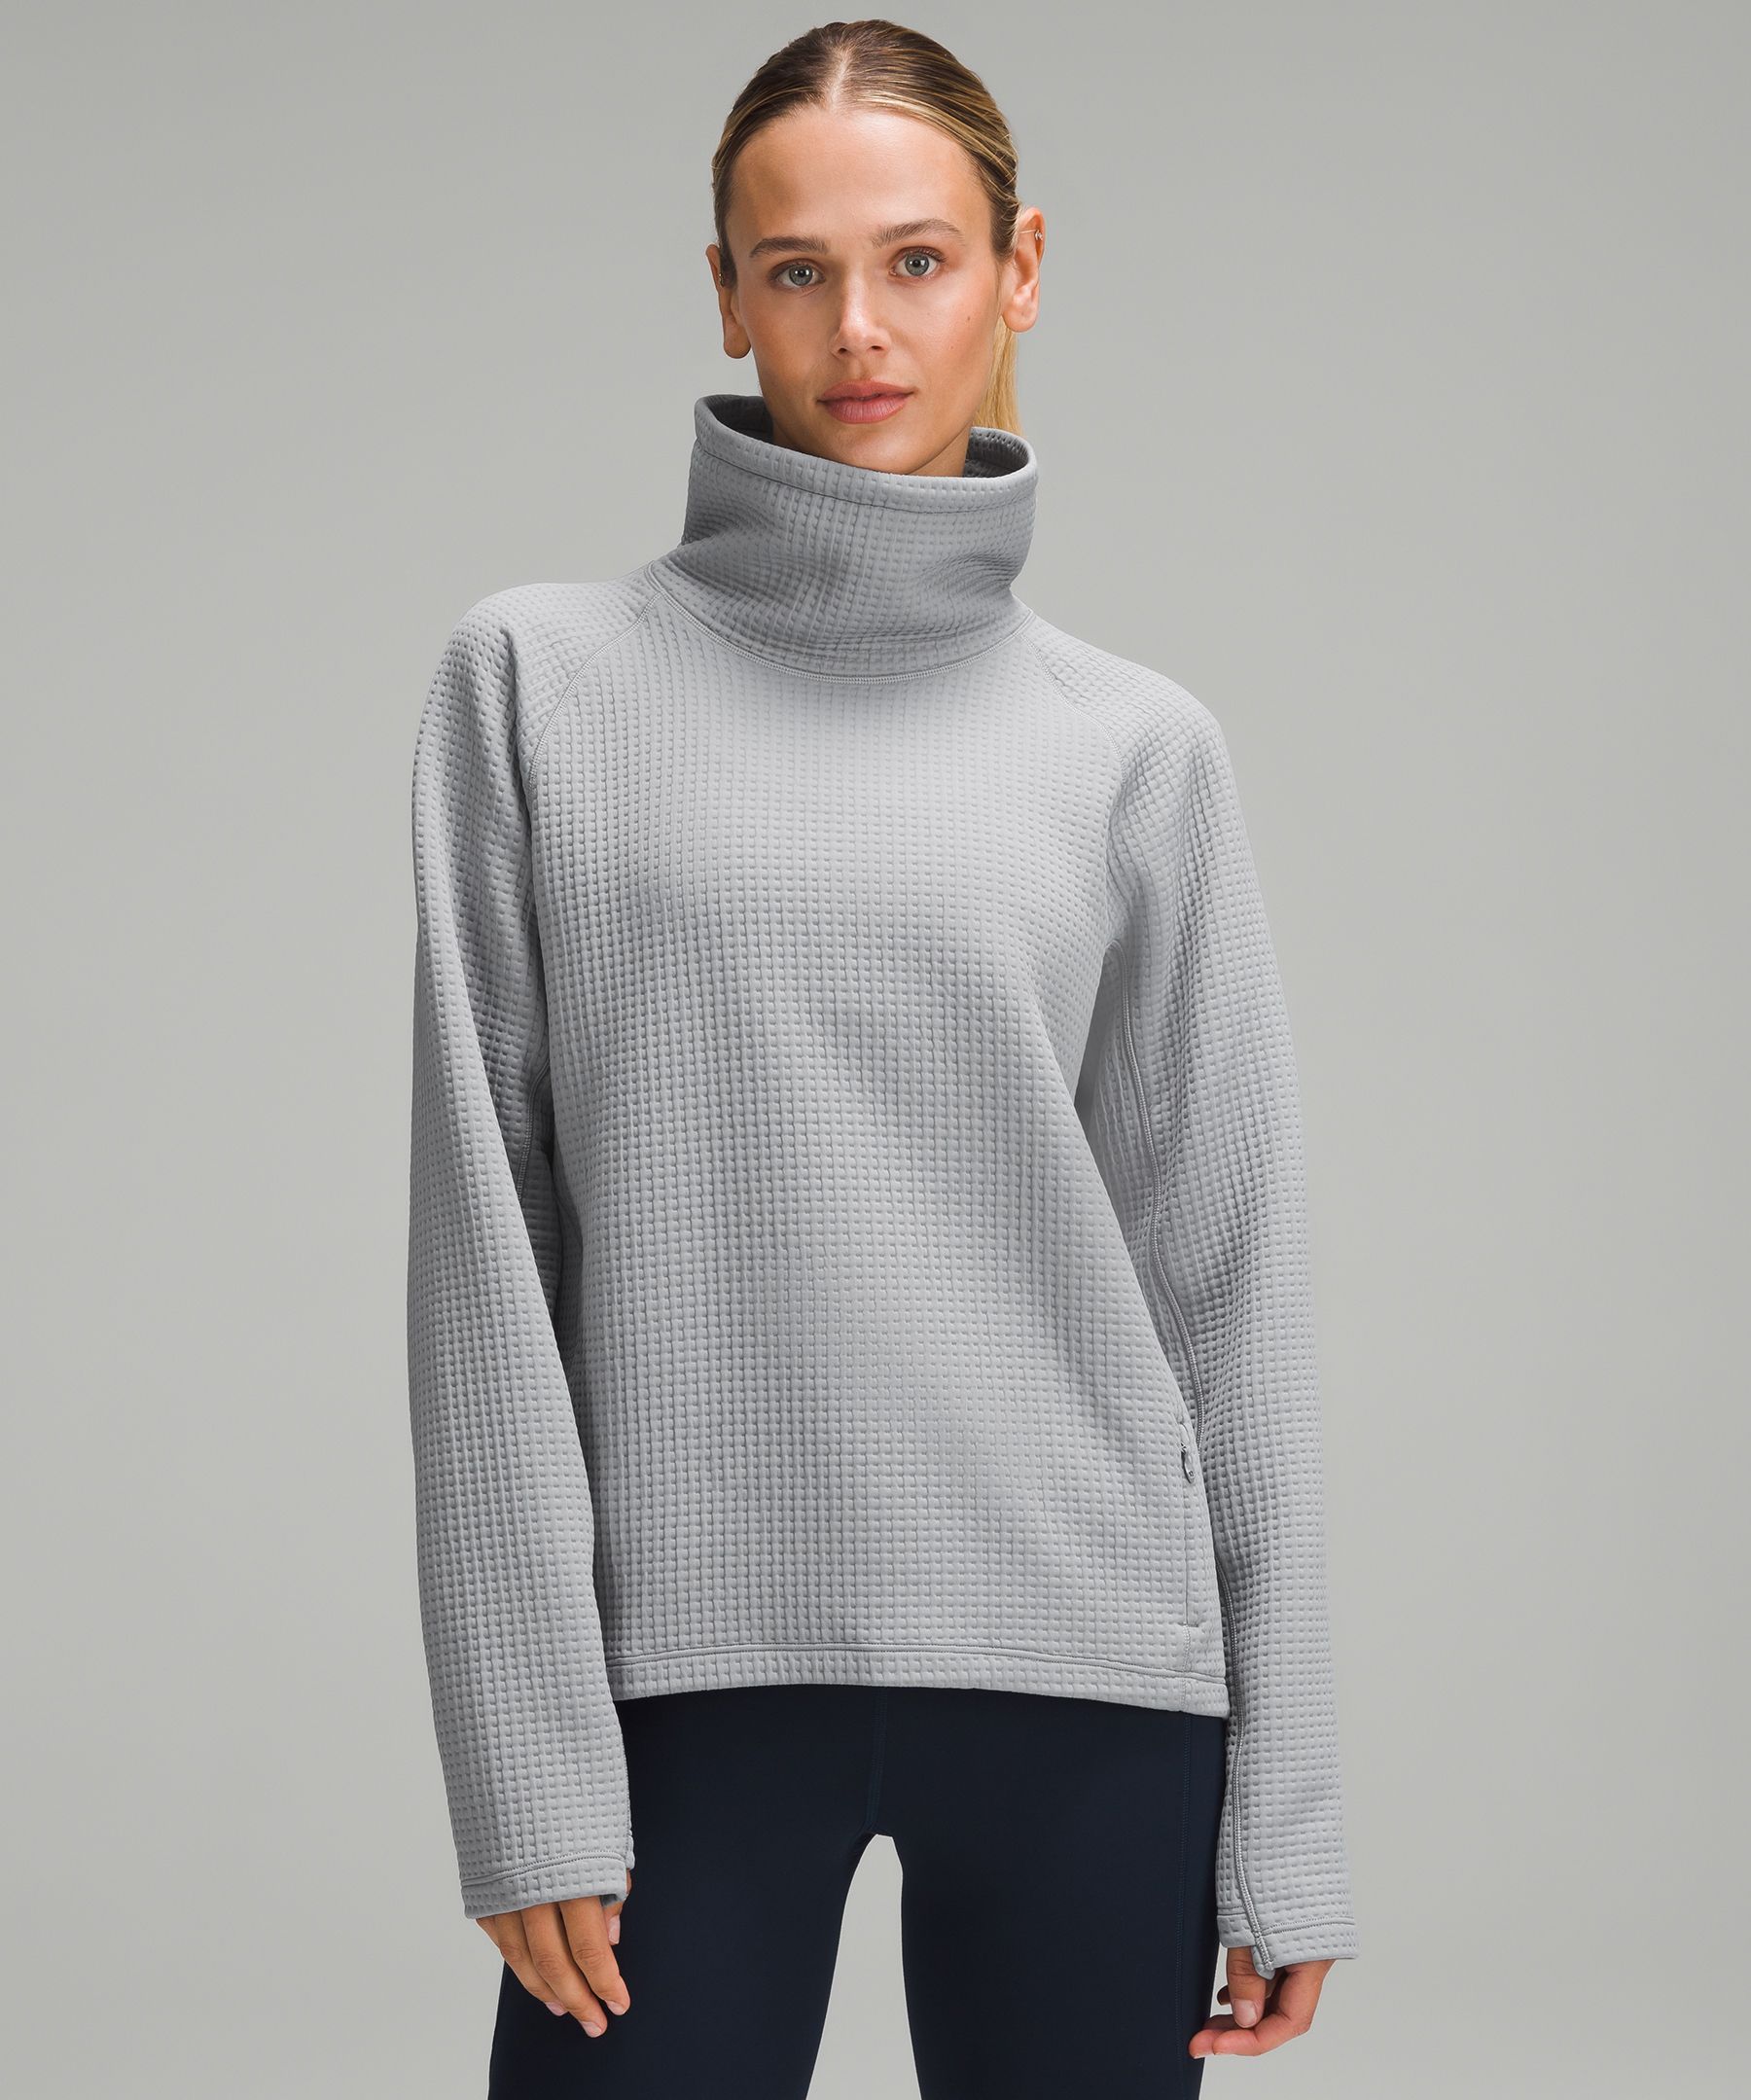 Lululemon Womens Long Sleeve Crew Neck Striped Knit Shirt Gray